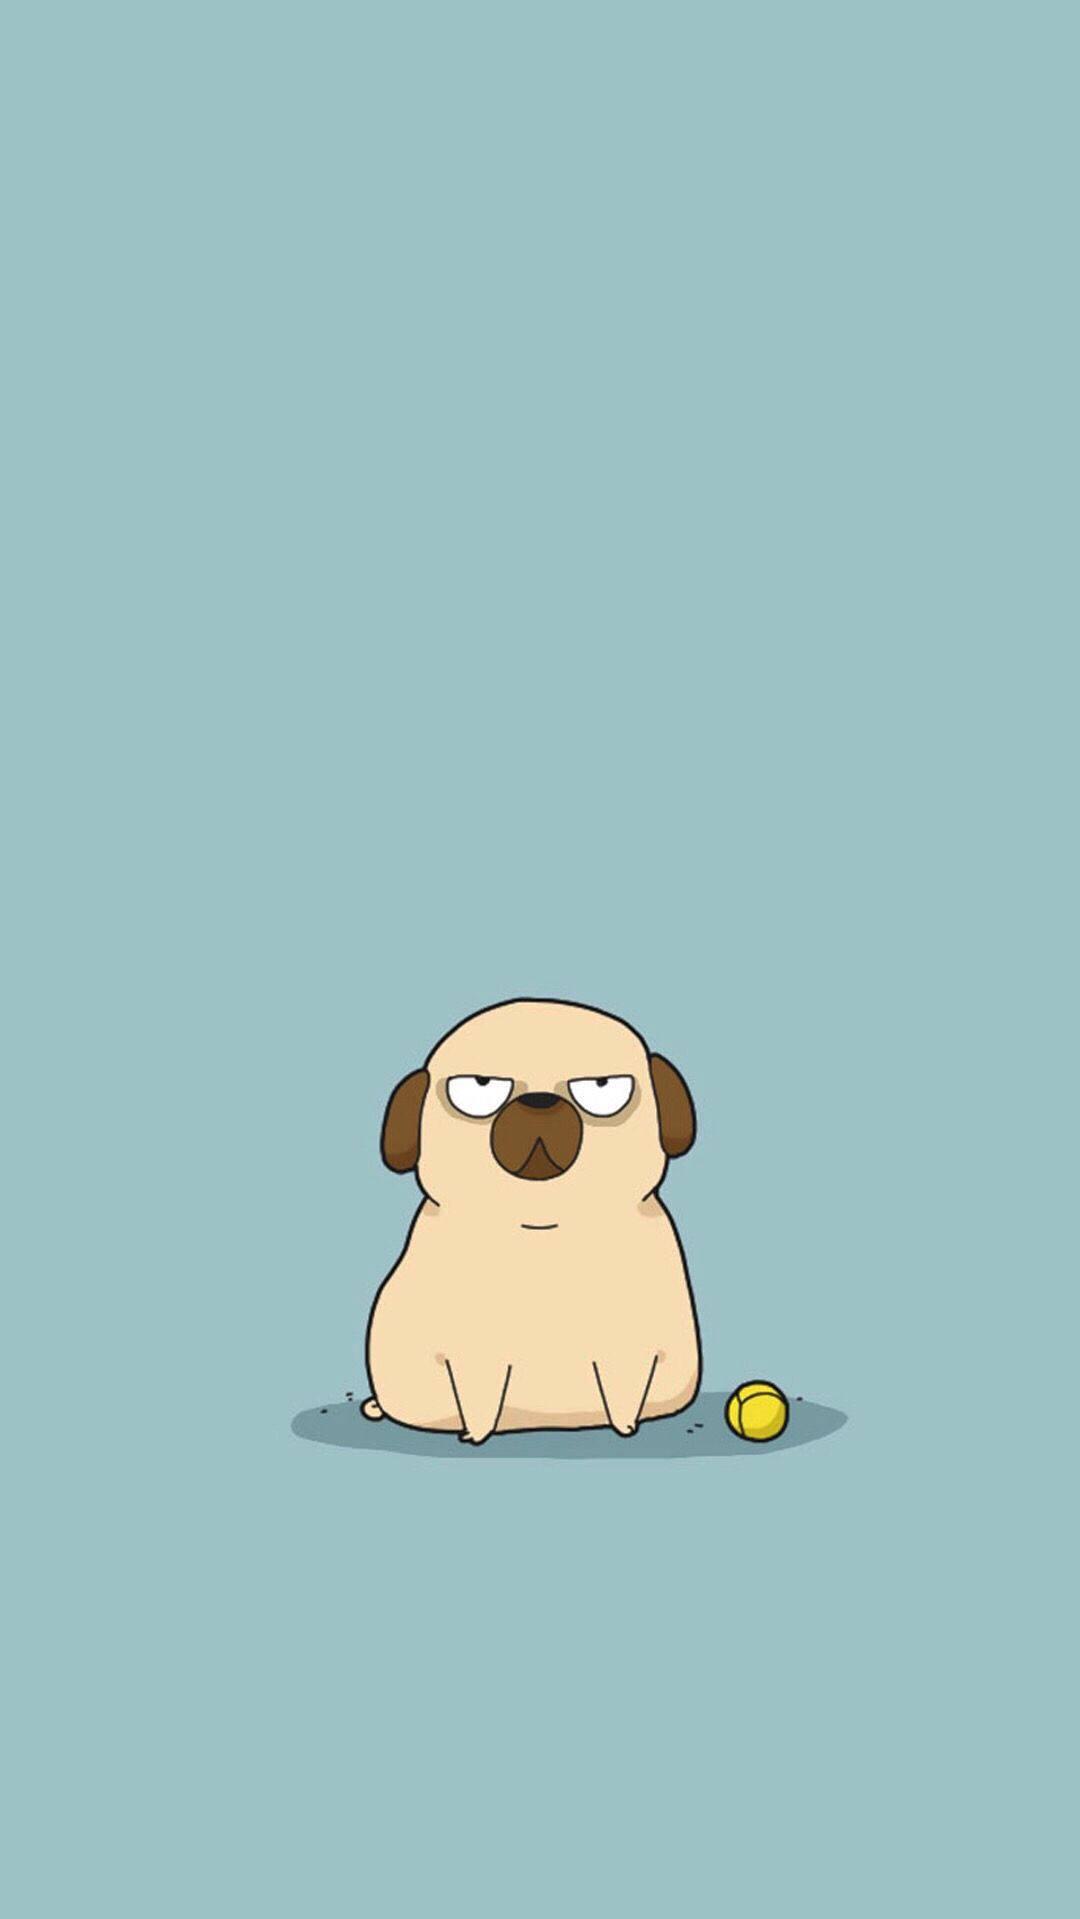 Cartoon Pug Dog With Ball Wallpaper